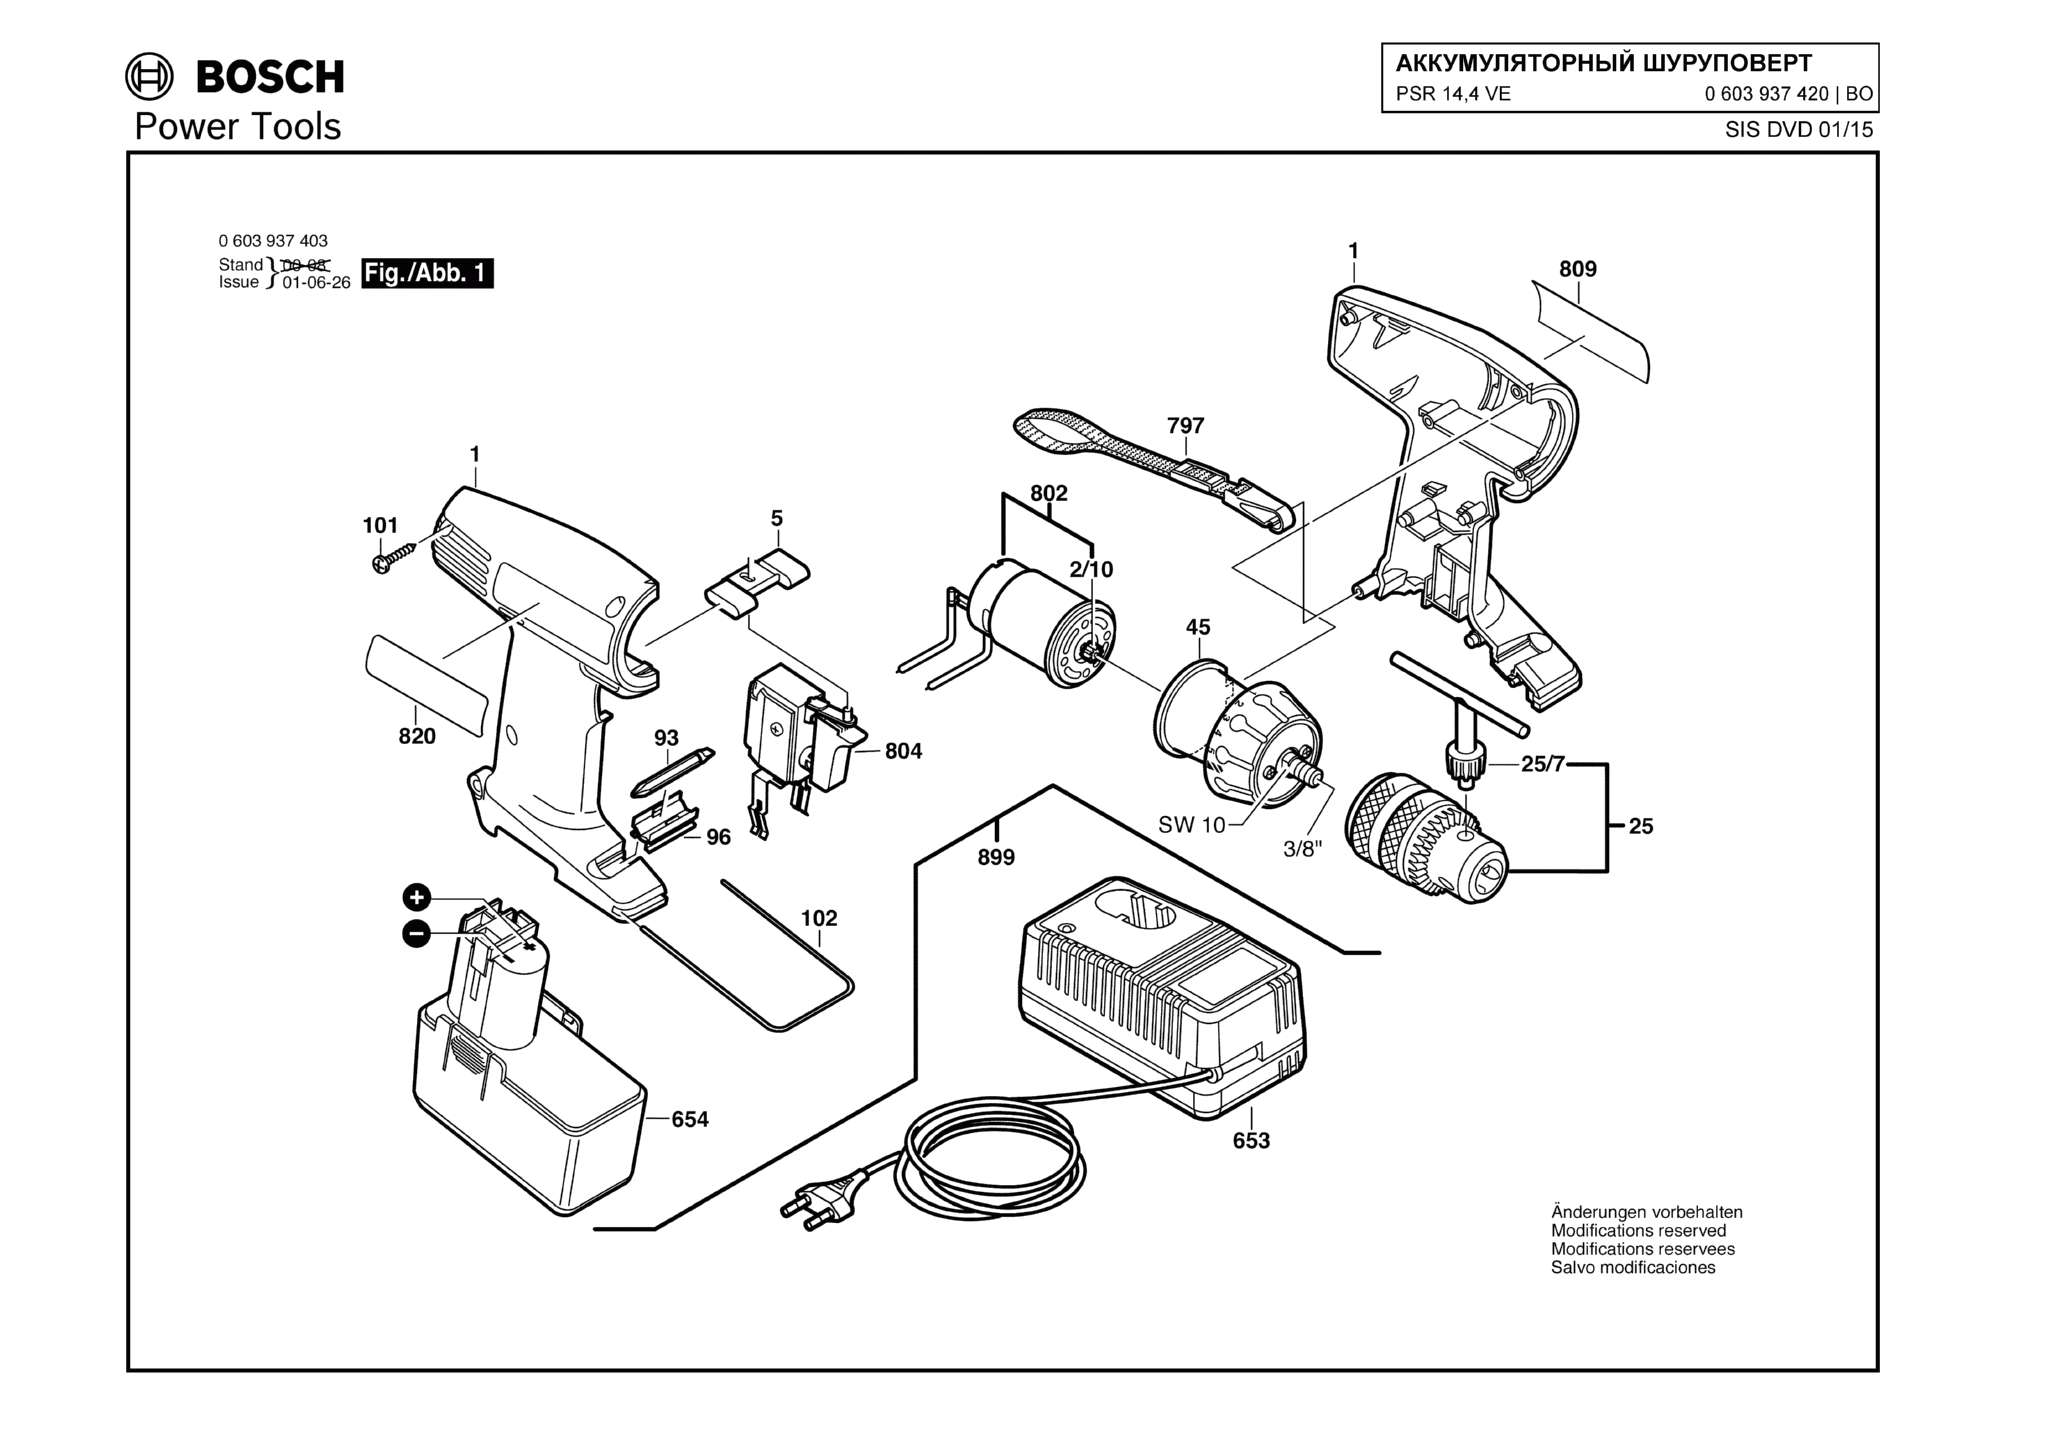 Запчасти, схема и деталировка Bosch PSR 14,4 VE (ТИП 0603937420)